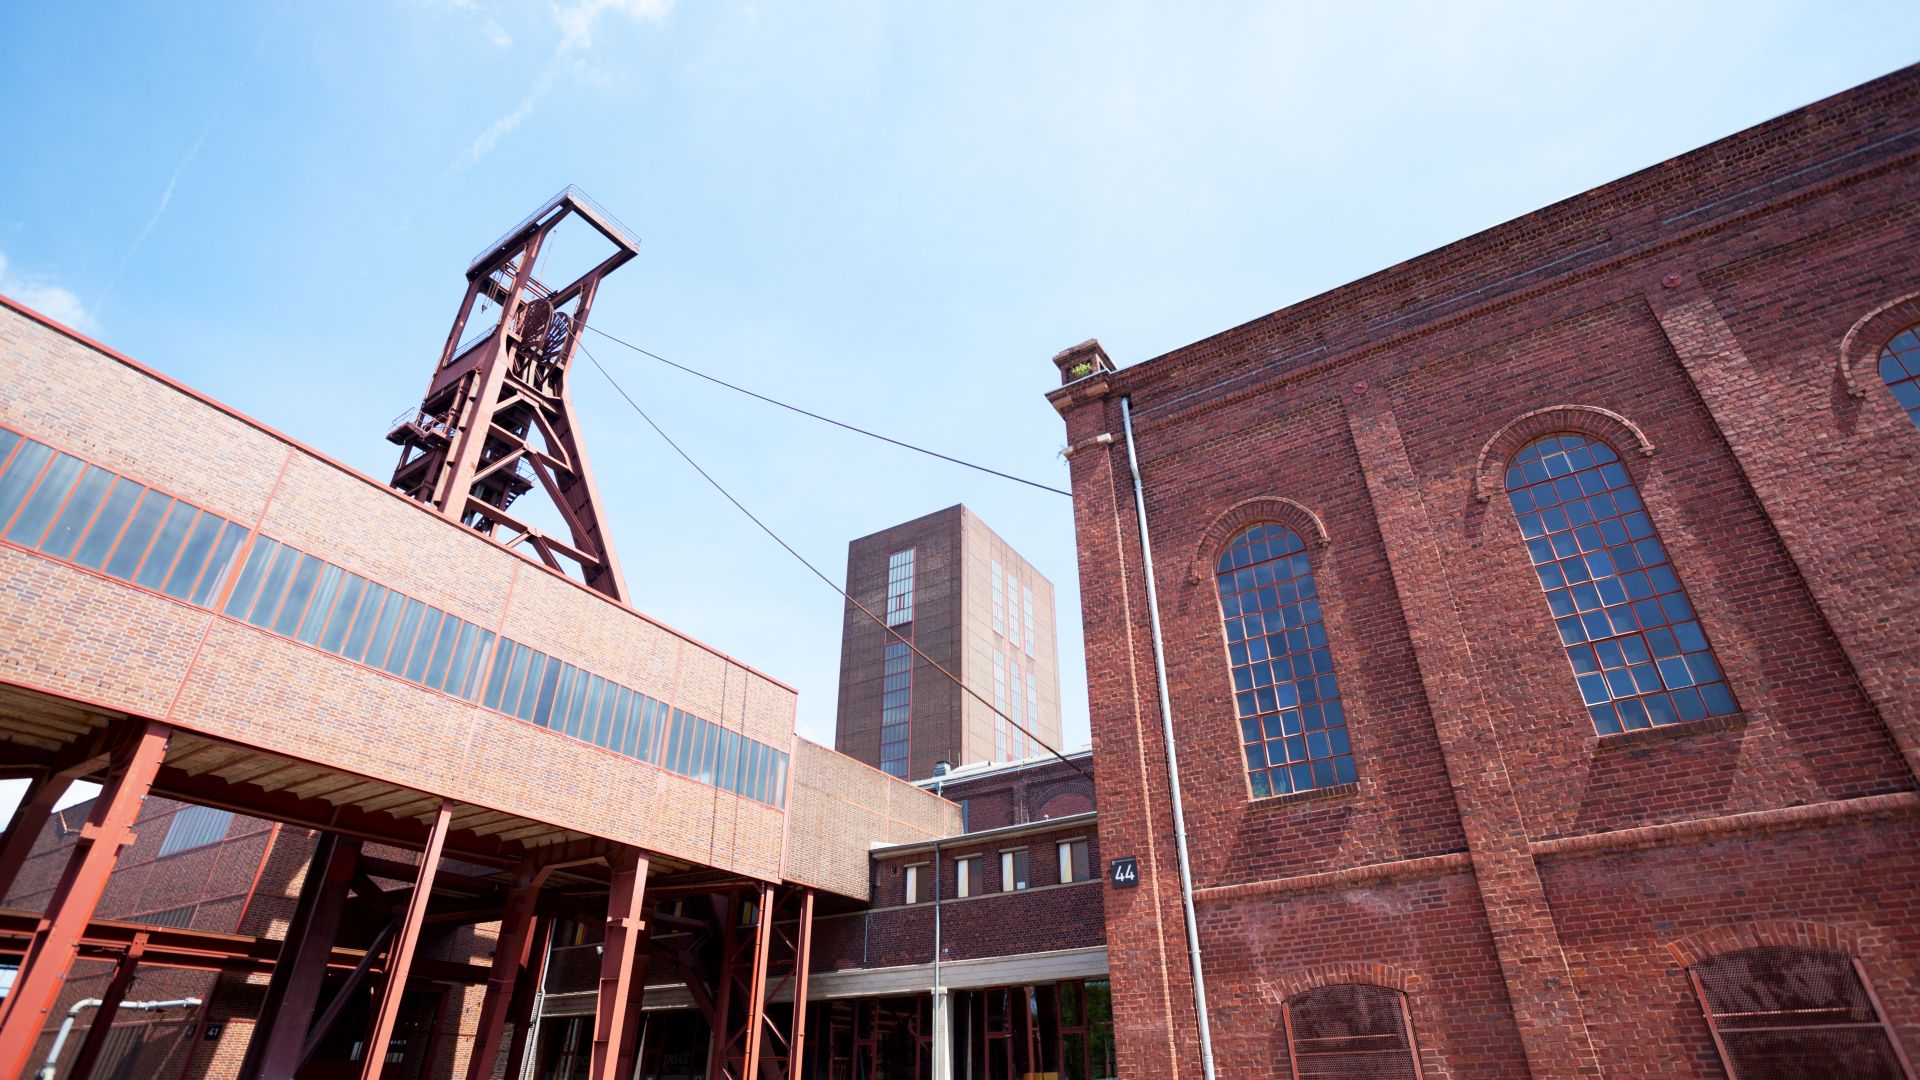 Essen: Kunstschacht and Zollverein colliery, UNESCO World Heritage